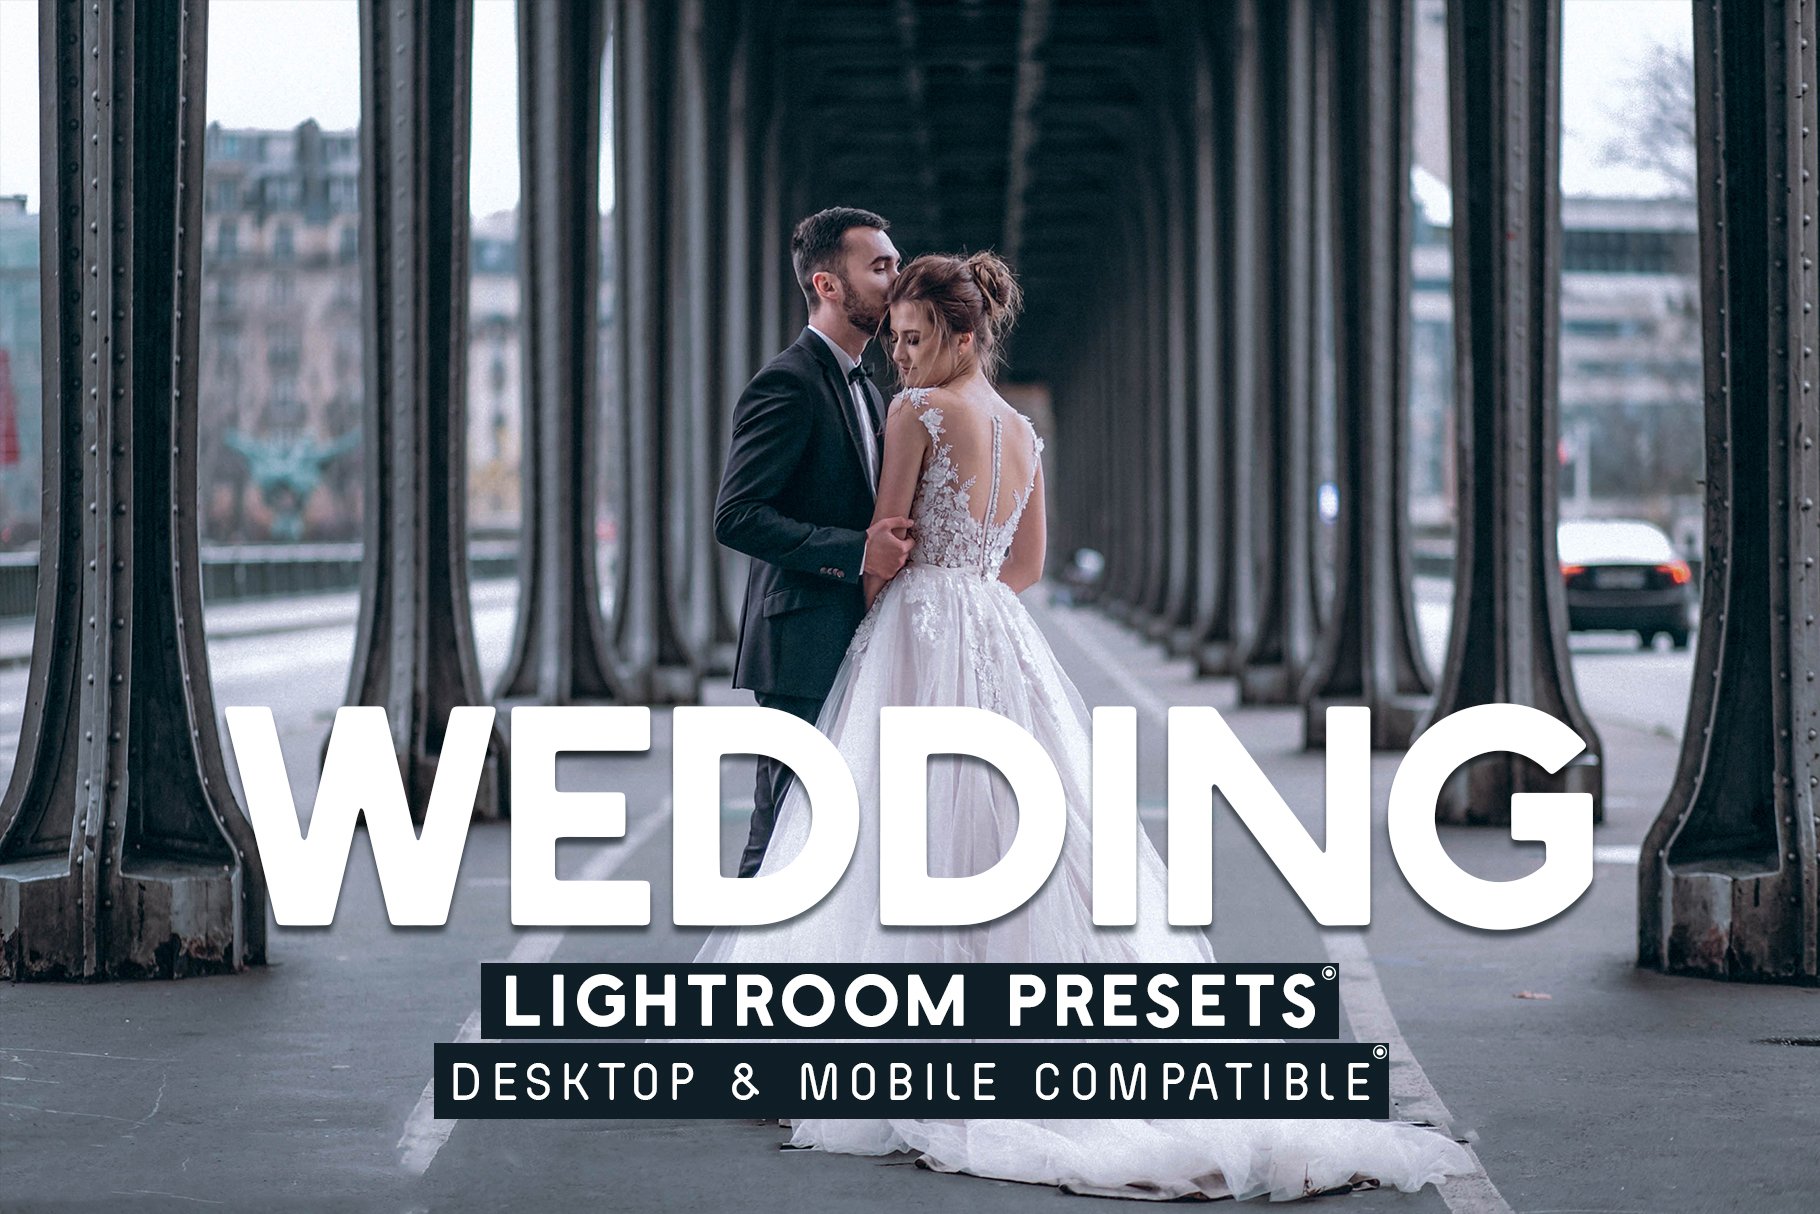 Wedding - Lightroom Presetscover image.